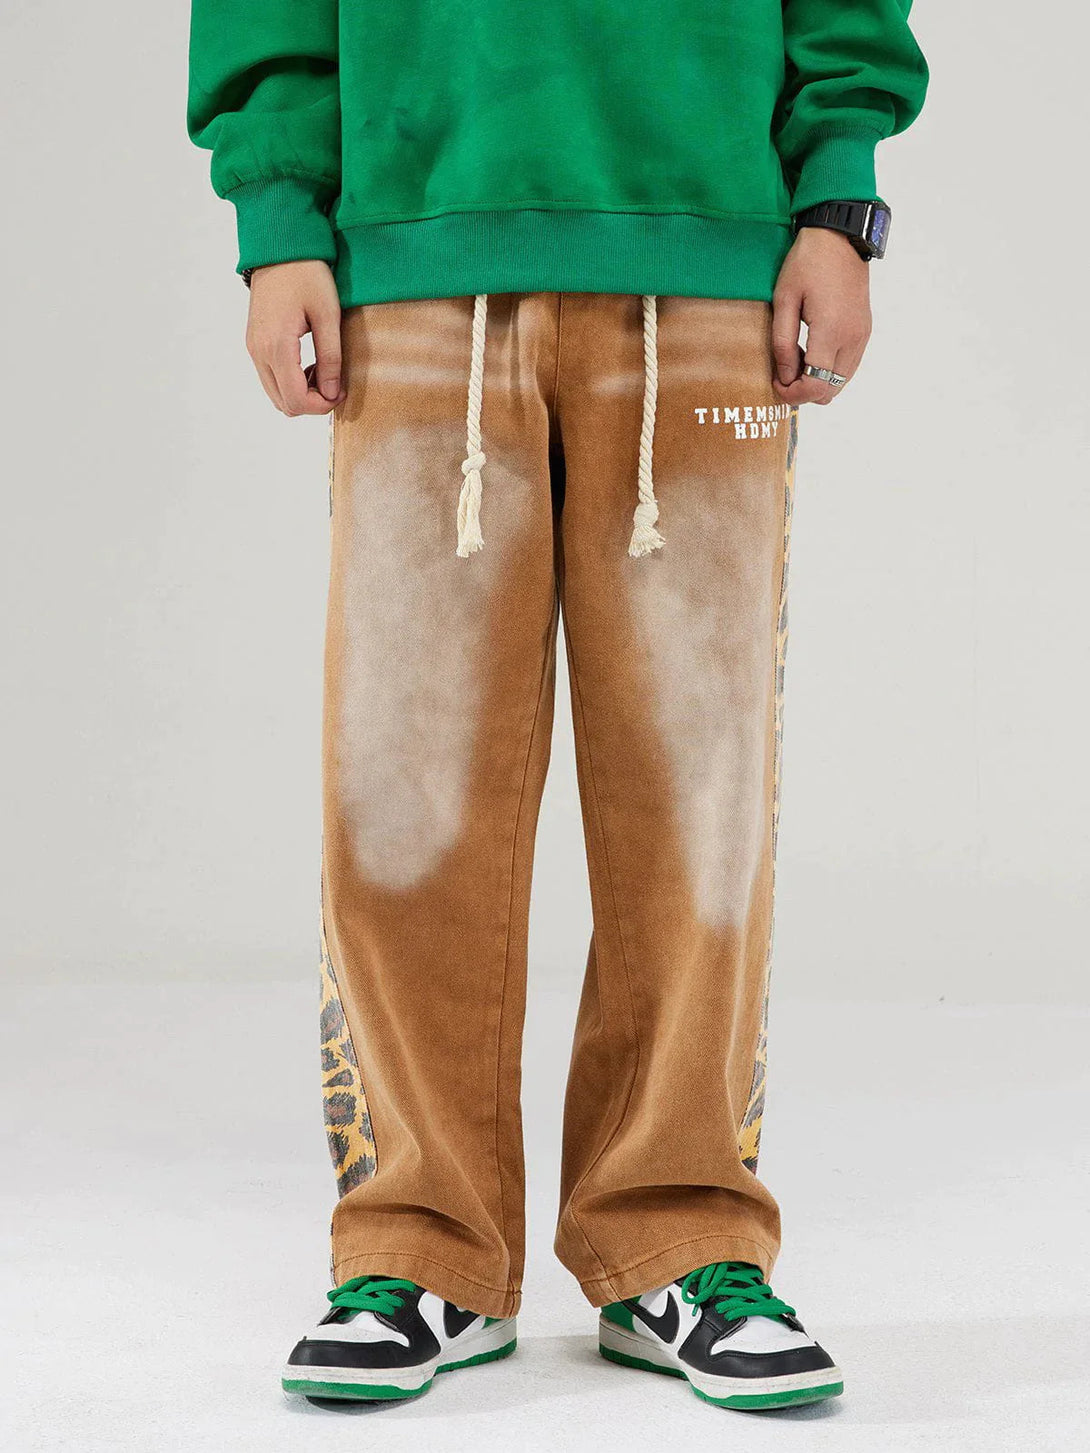 Majesda® - Washed Side Leopard Print Pants outfit ideas streetwear fashion